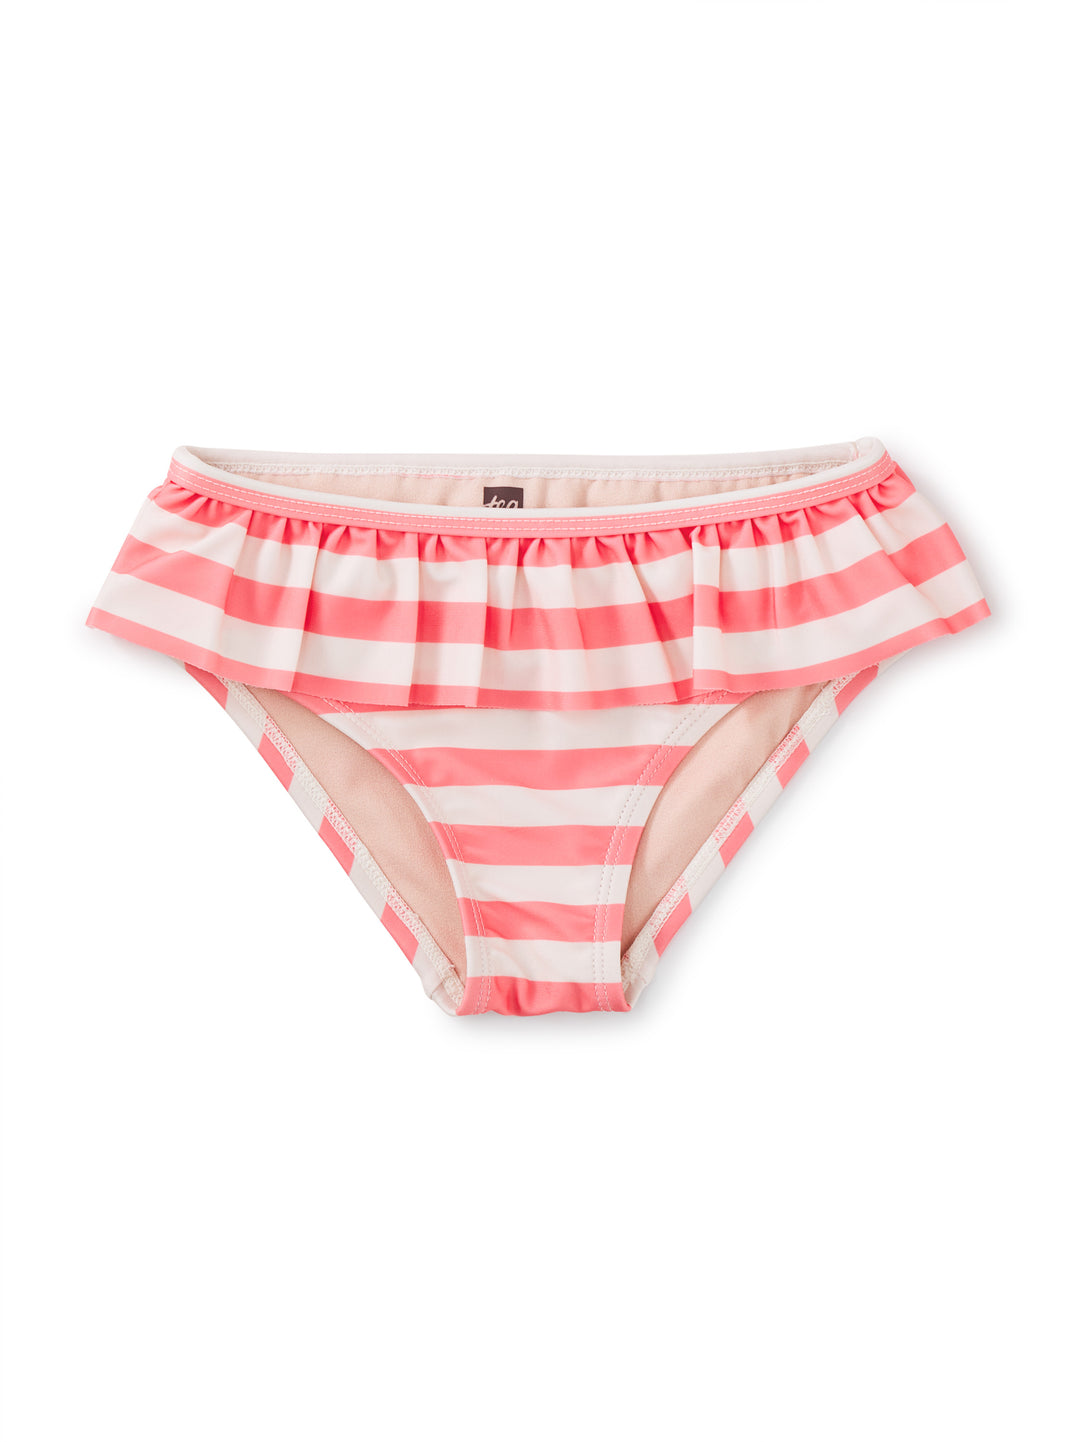 Tea Collection Ruffled Bikini Bottom, Swim Stripe in Bubble Gum |Mockingbird Baby & Kids